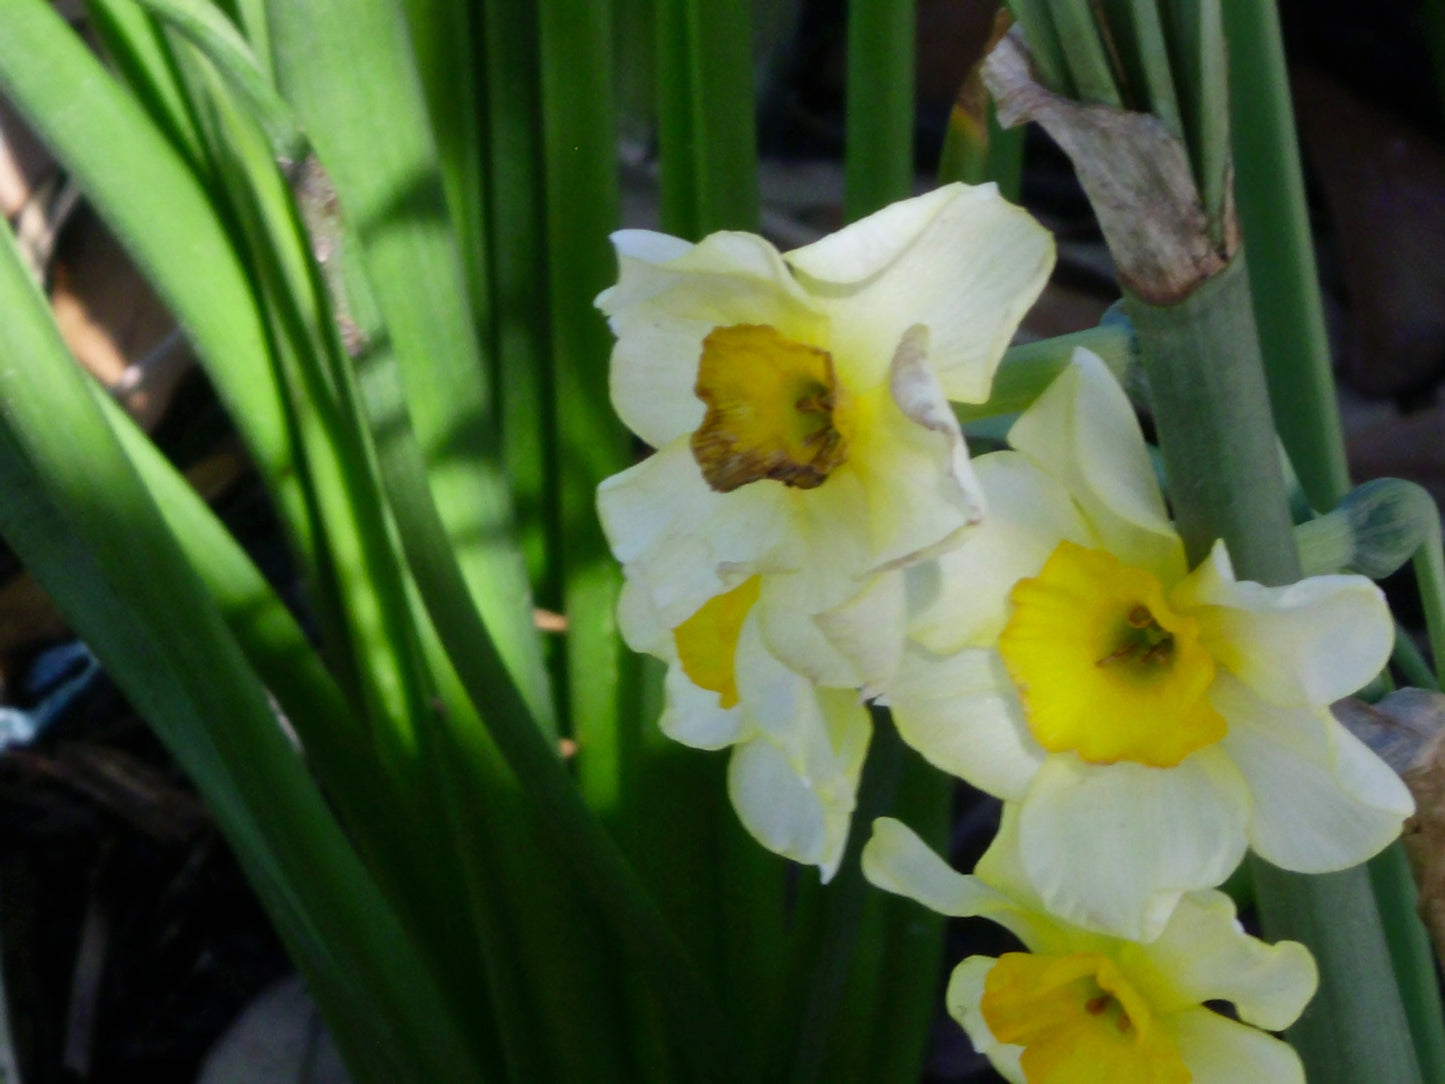 Daffodil Photography by Gabrielle Howard